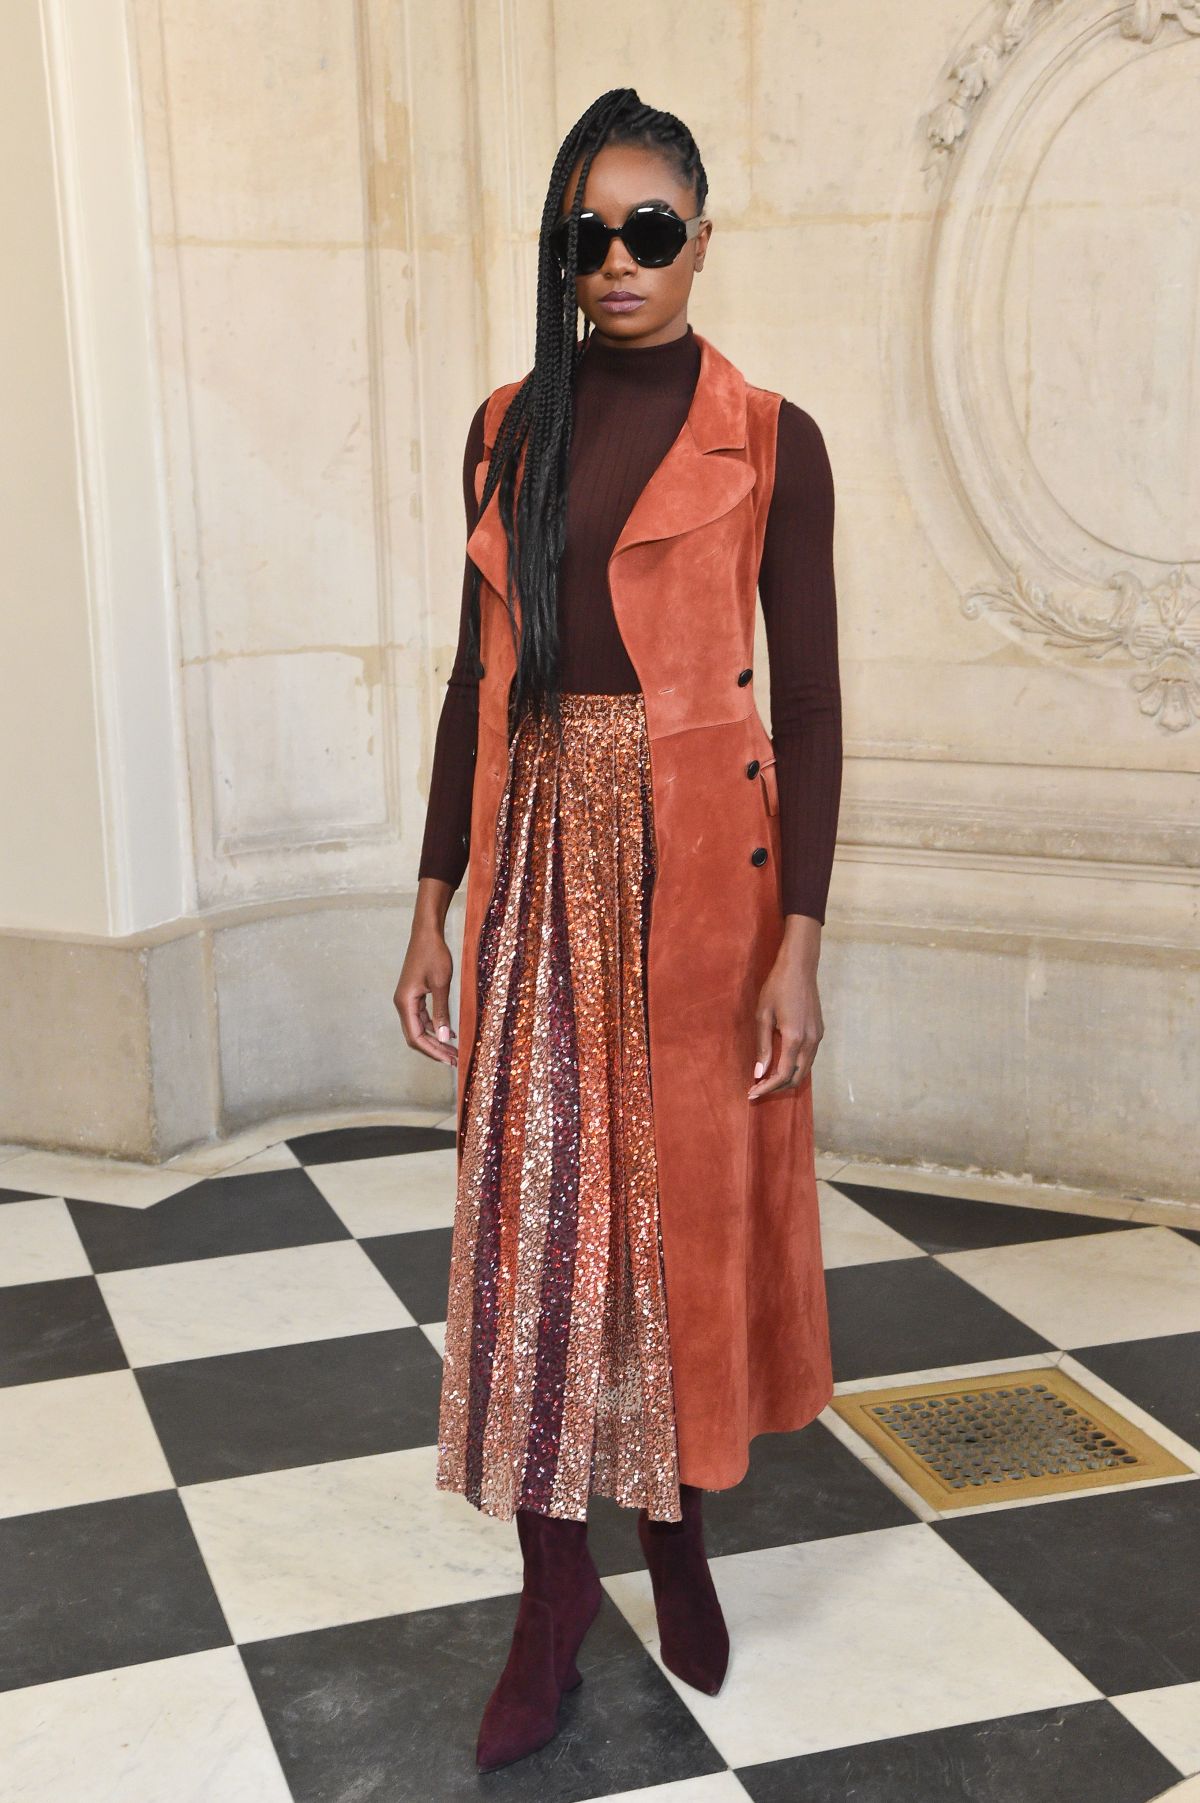 KIKI LAYNE at Christian Dior Show at Paris Fashion Week 01/21/2019 ...